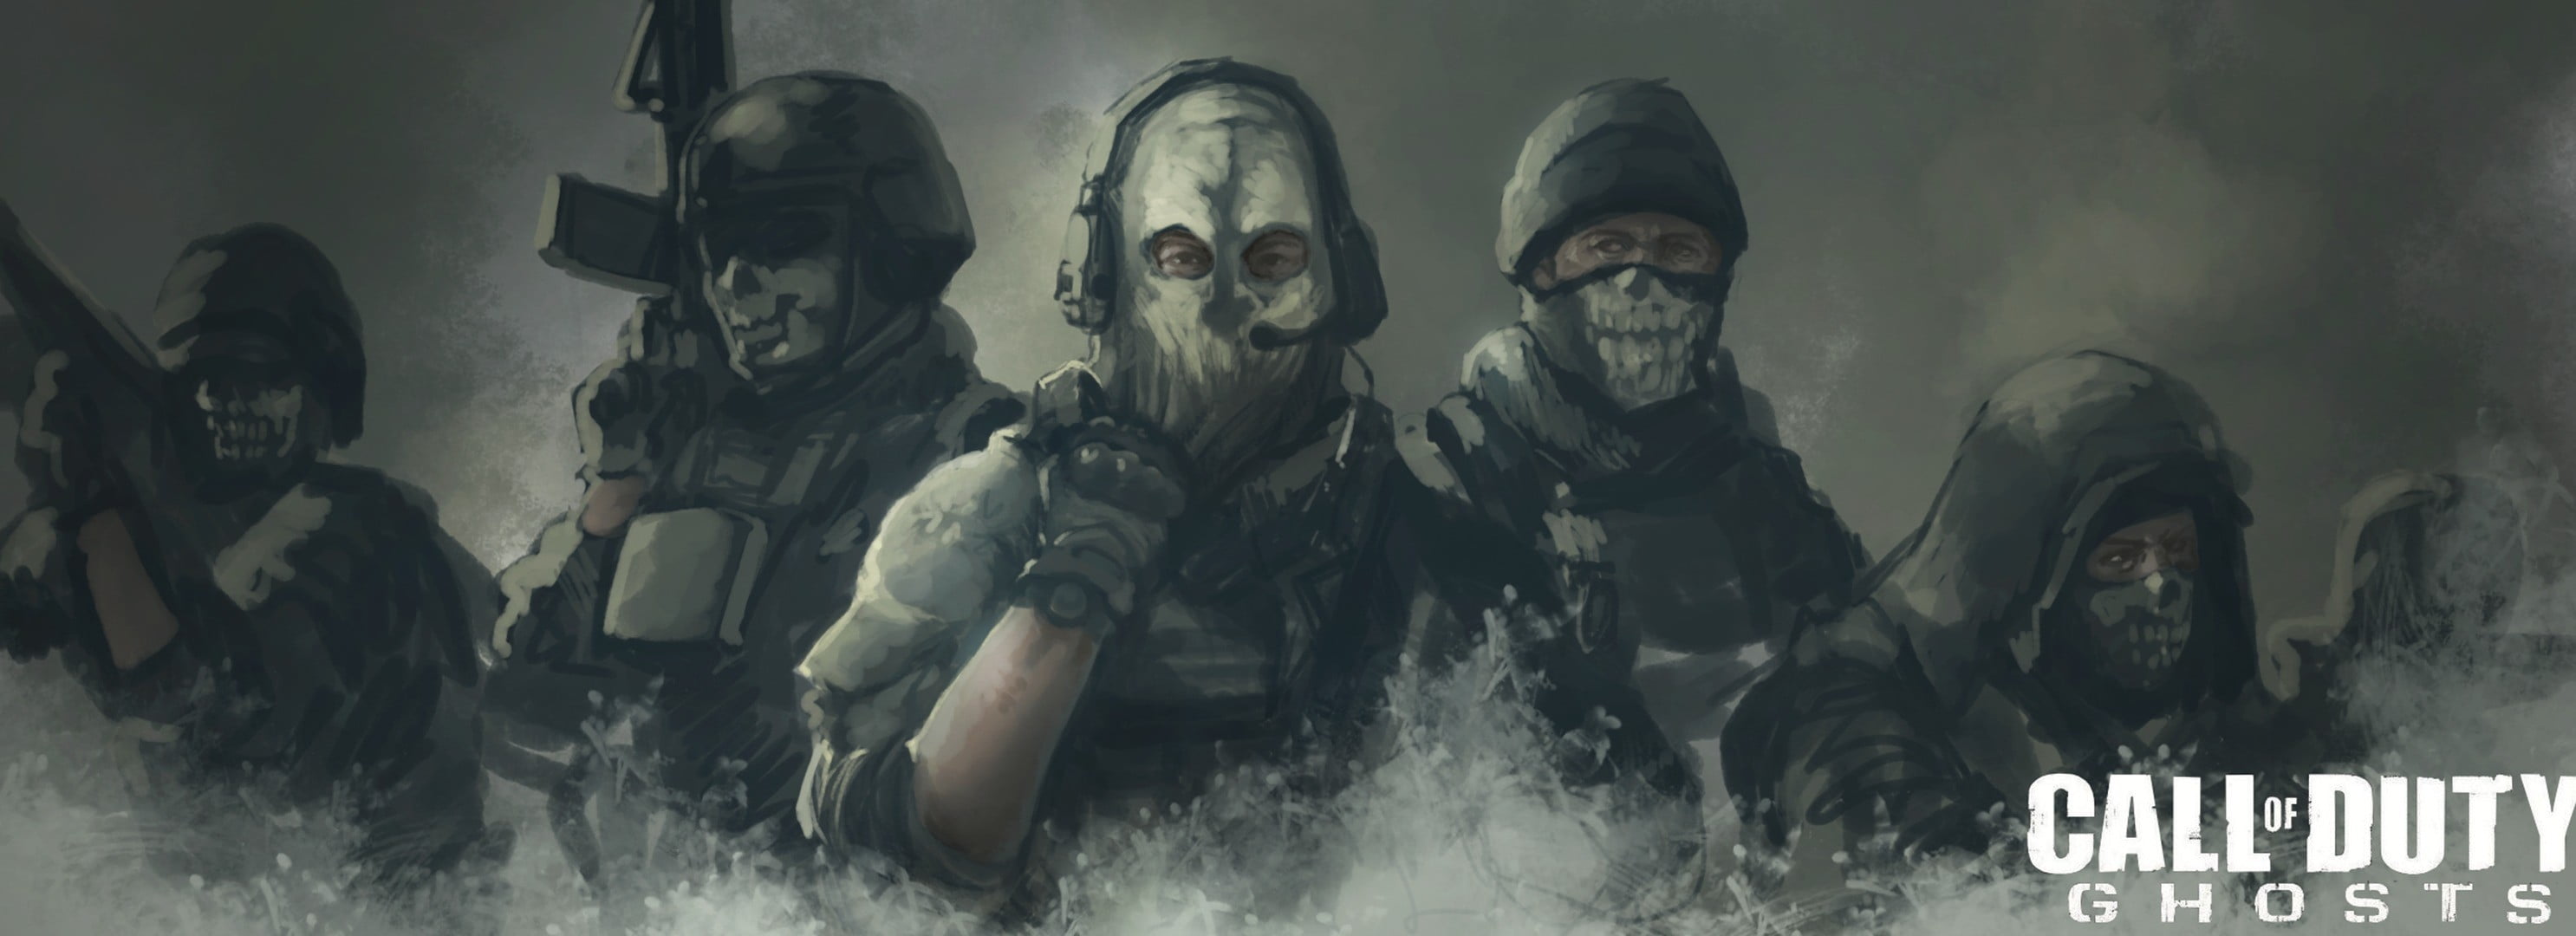 Call Of Duty Ghosts Art - 2972x1080 Wallpaper 